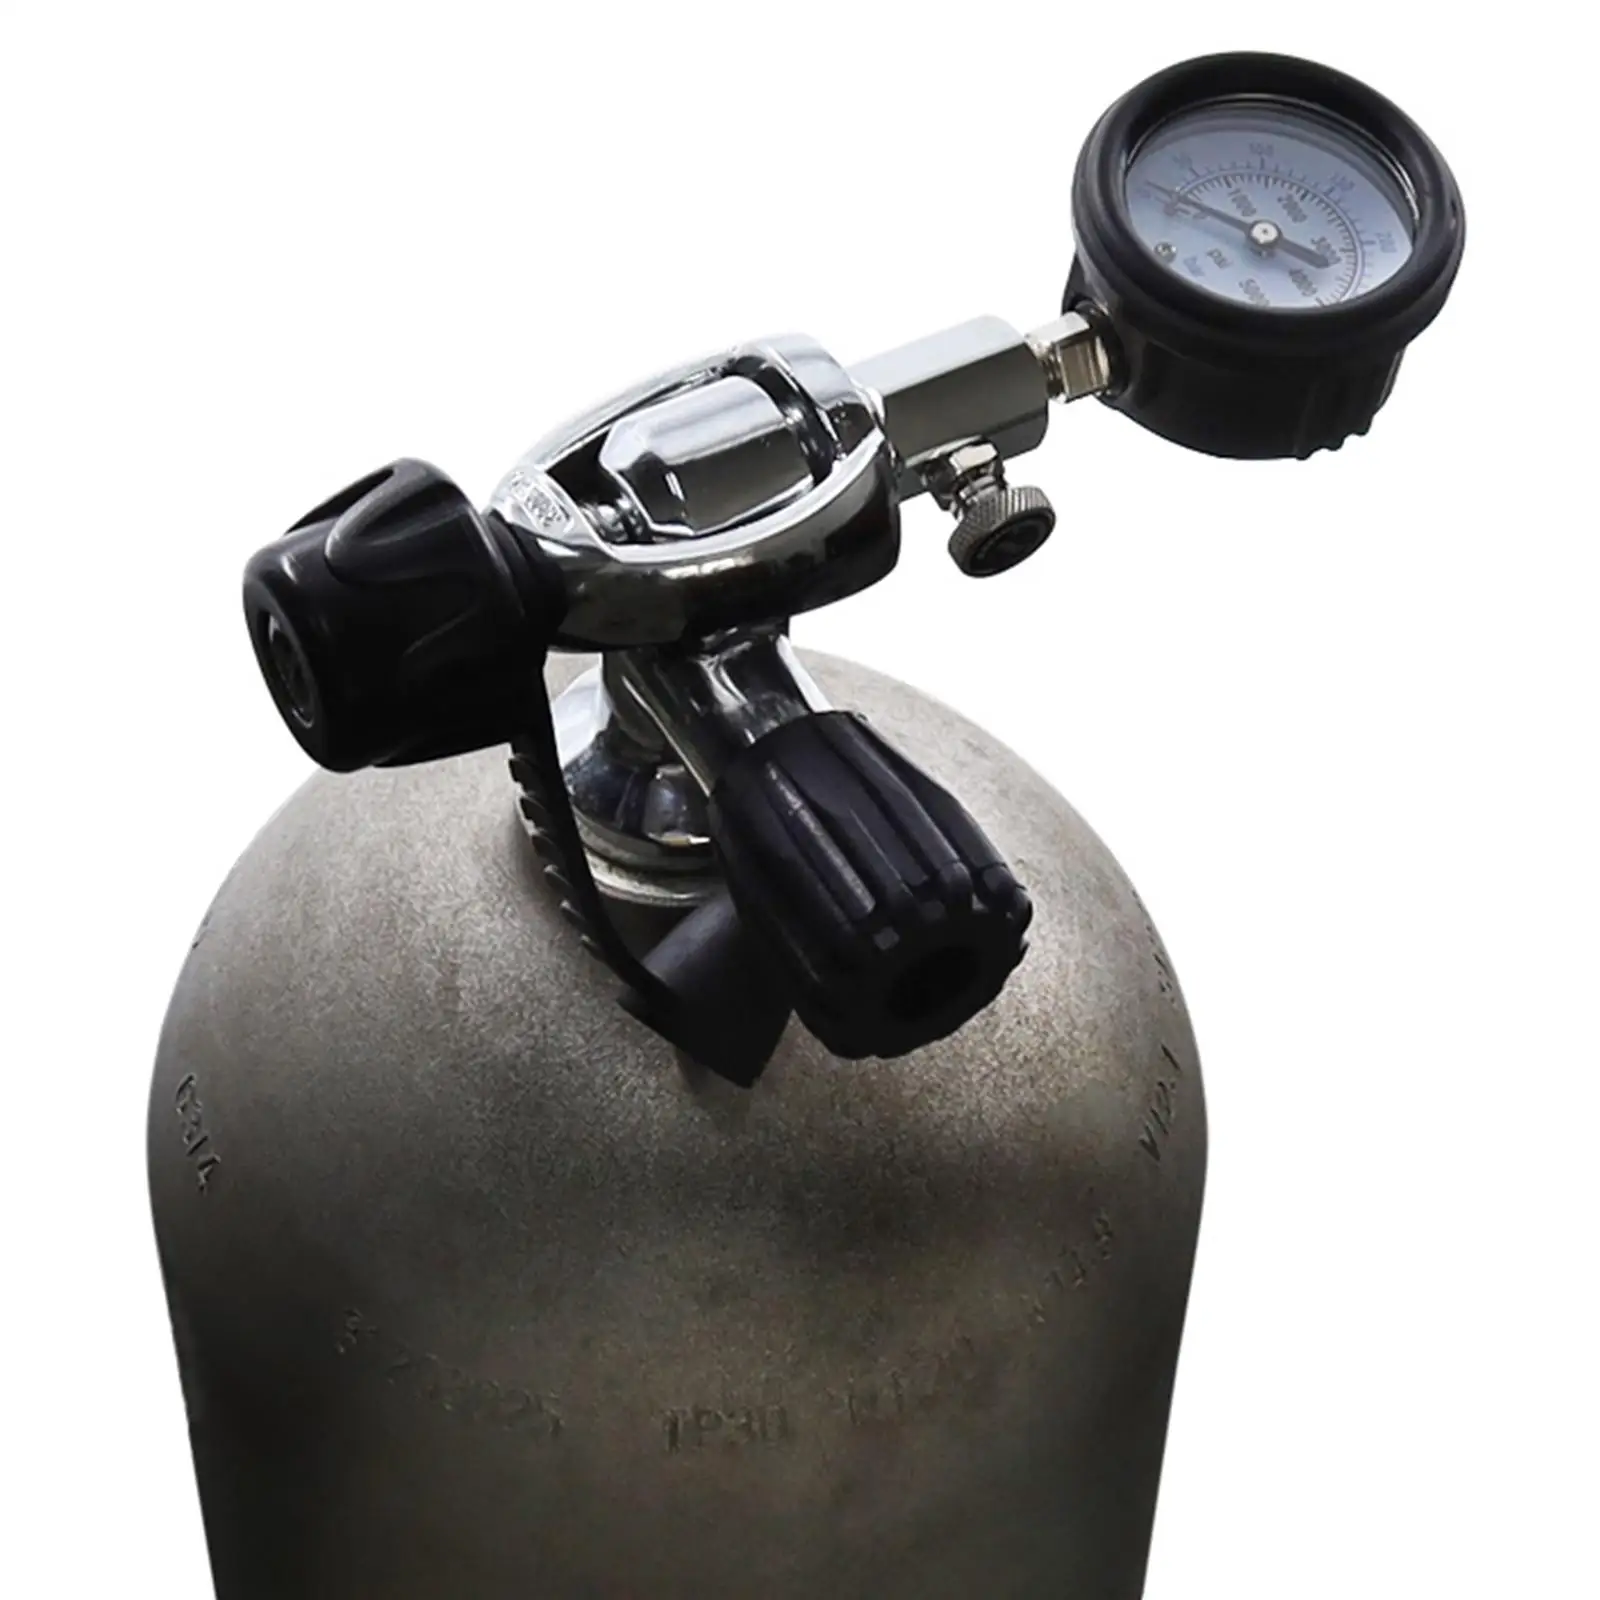 Professional Submersible Diving Pressure Gauge 5000PSI Air Tank Pressure Checker Dive Accessory